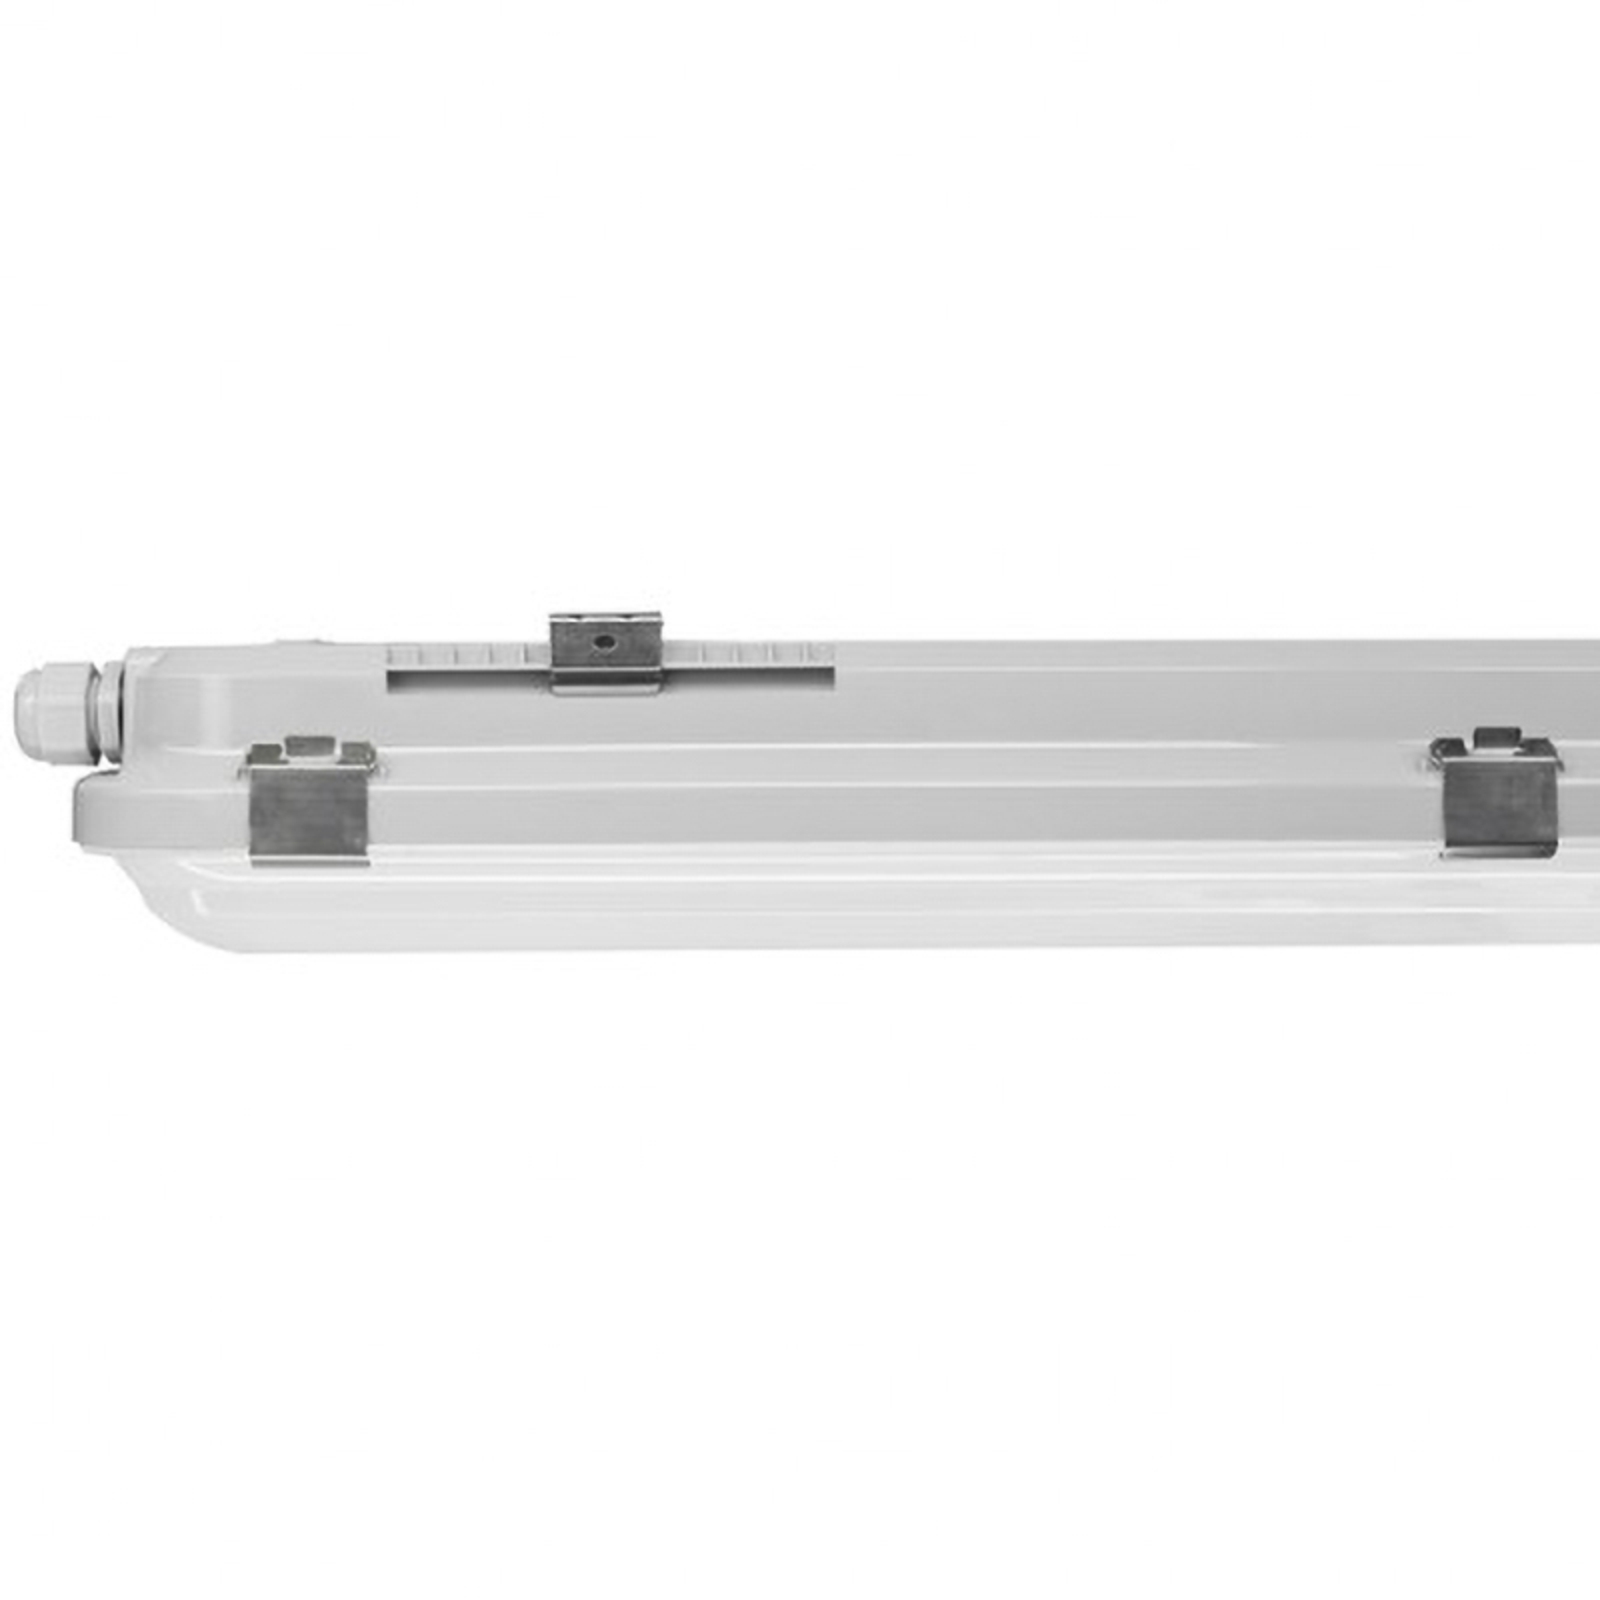 InnoGreen AQUOS 3.0 BASELine LED-Leuchte 152cm 850